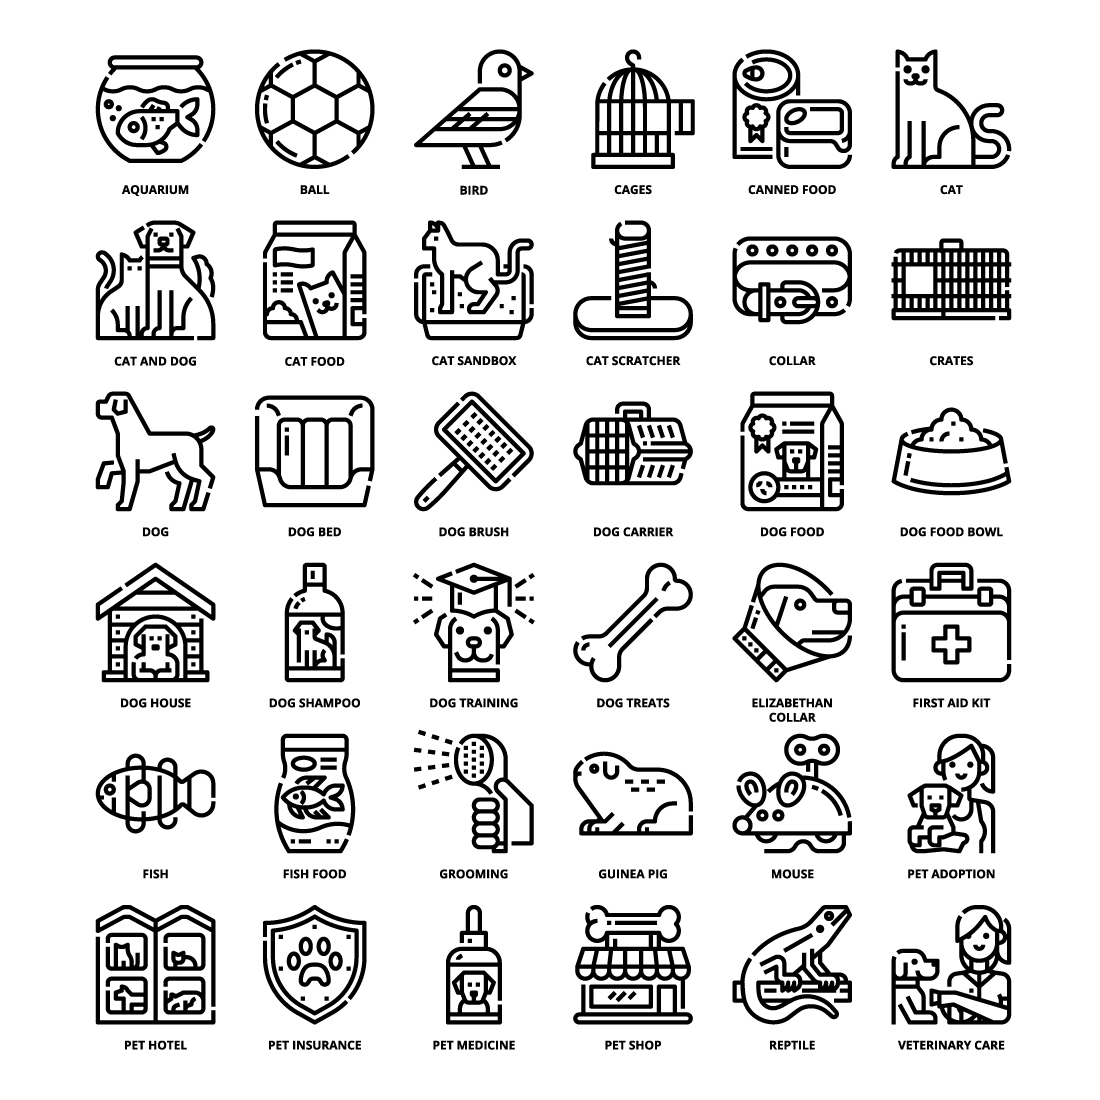 36 Pet Shop Icons Set x 4 Styles preview image.